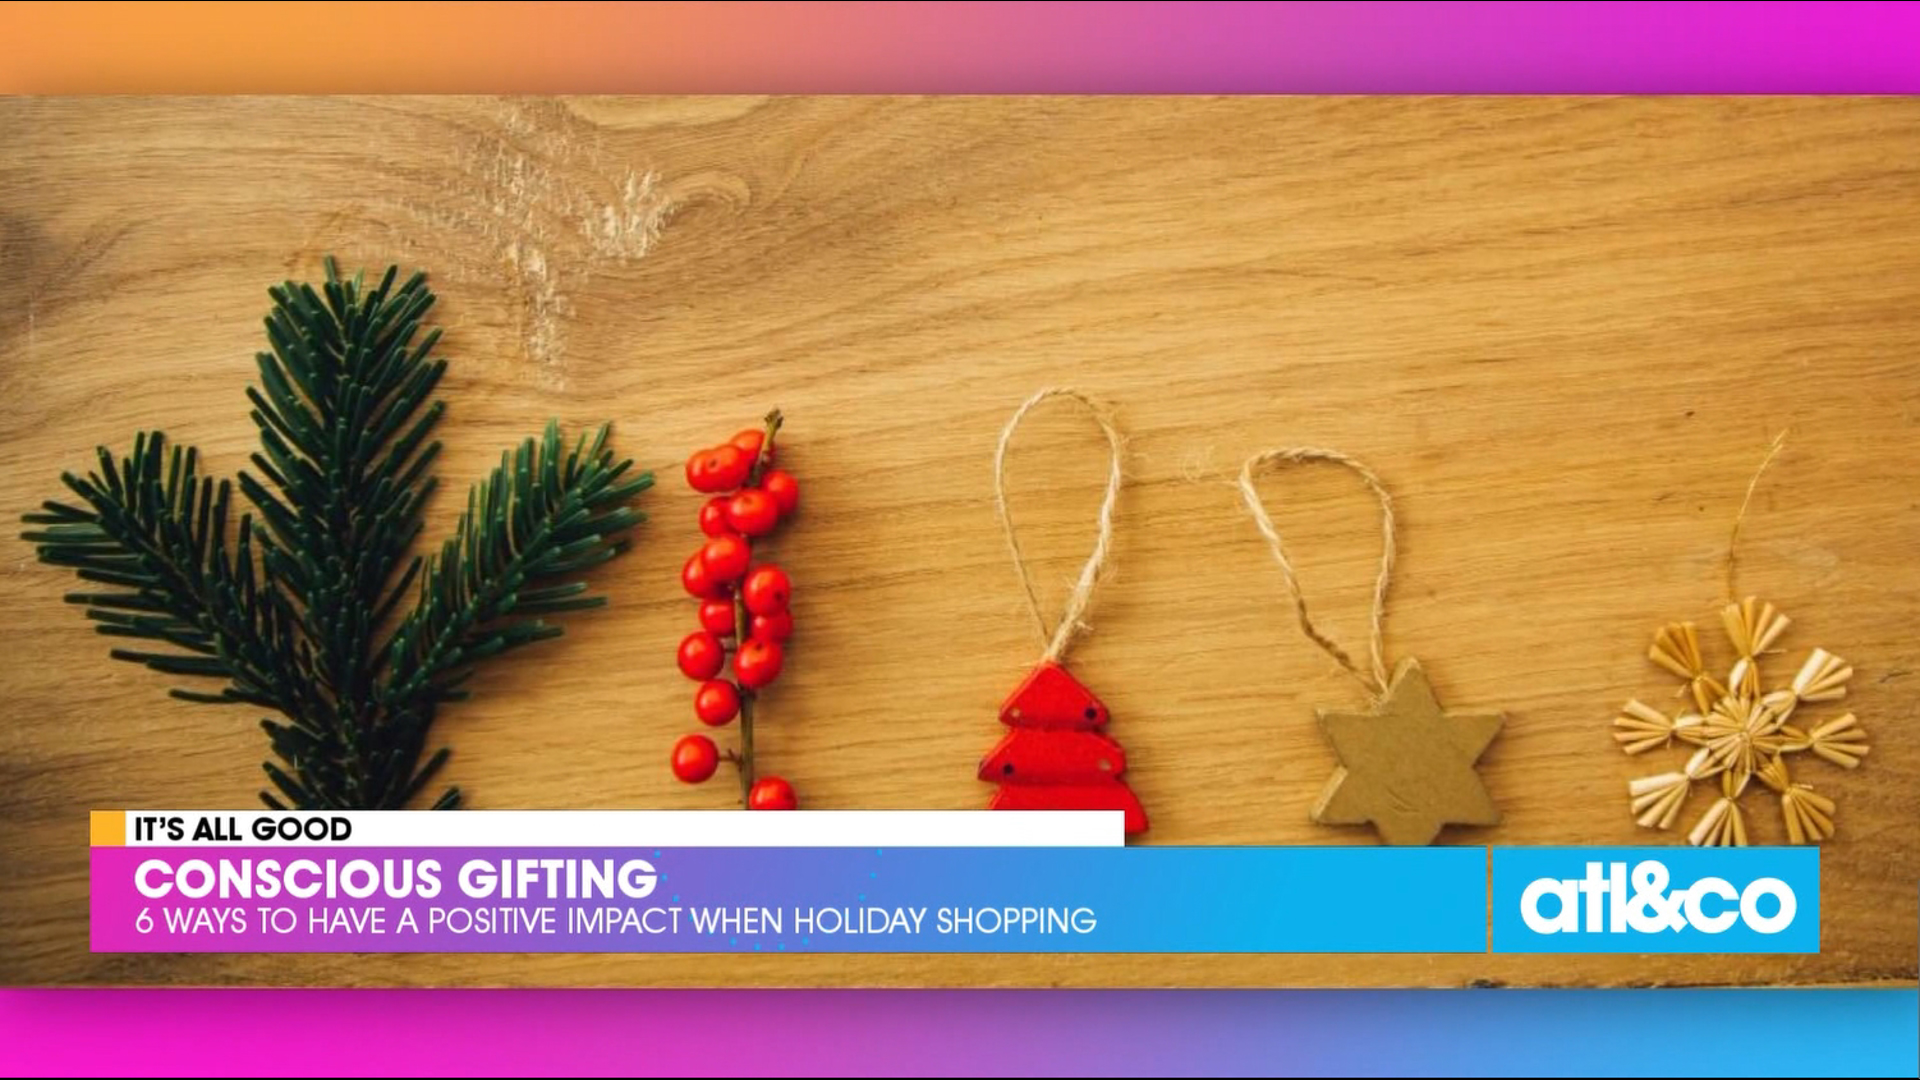 Cara shares ways to make a positive impact when holiday shopping.